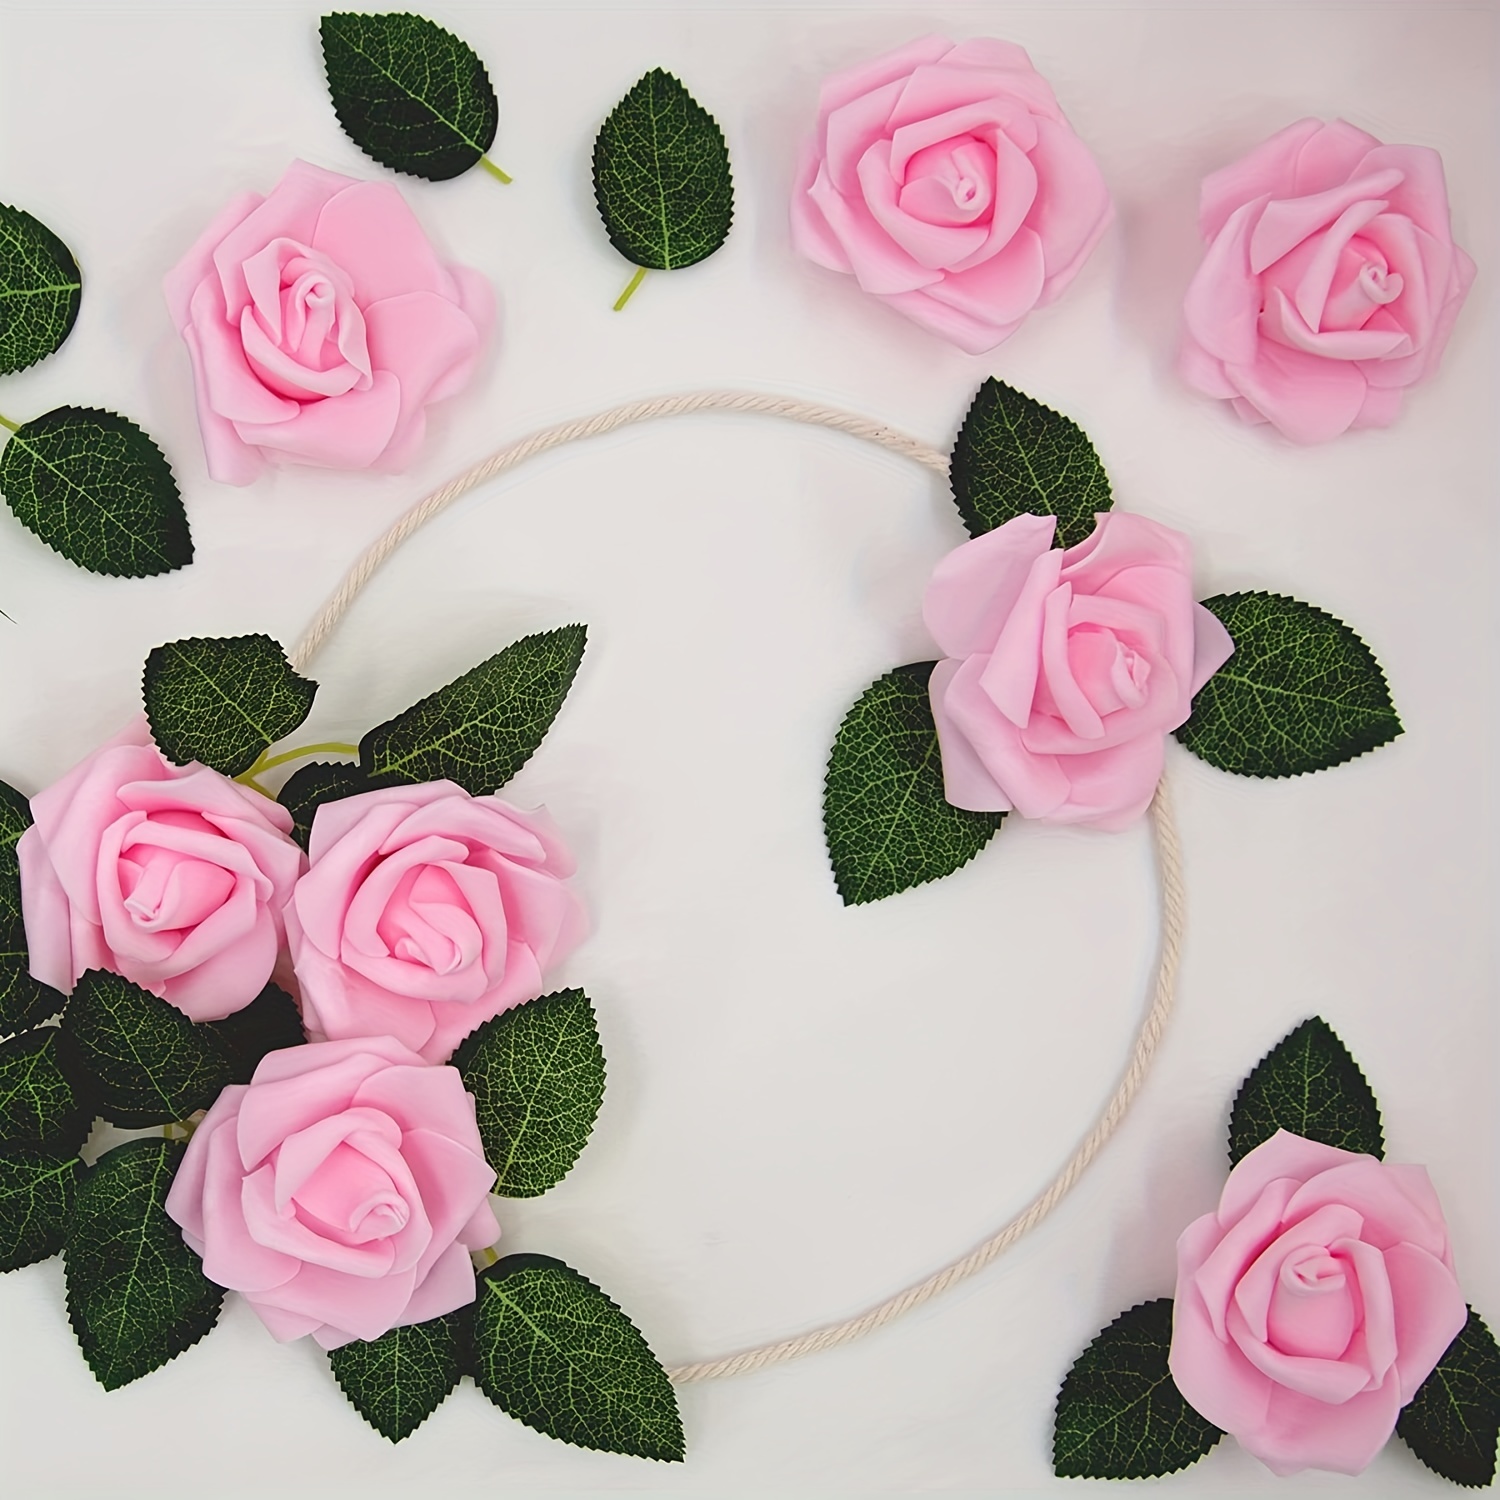 50PCS Fake Rose Flower Heads, Artificial Flower Foam Rose for DIY